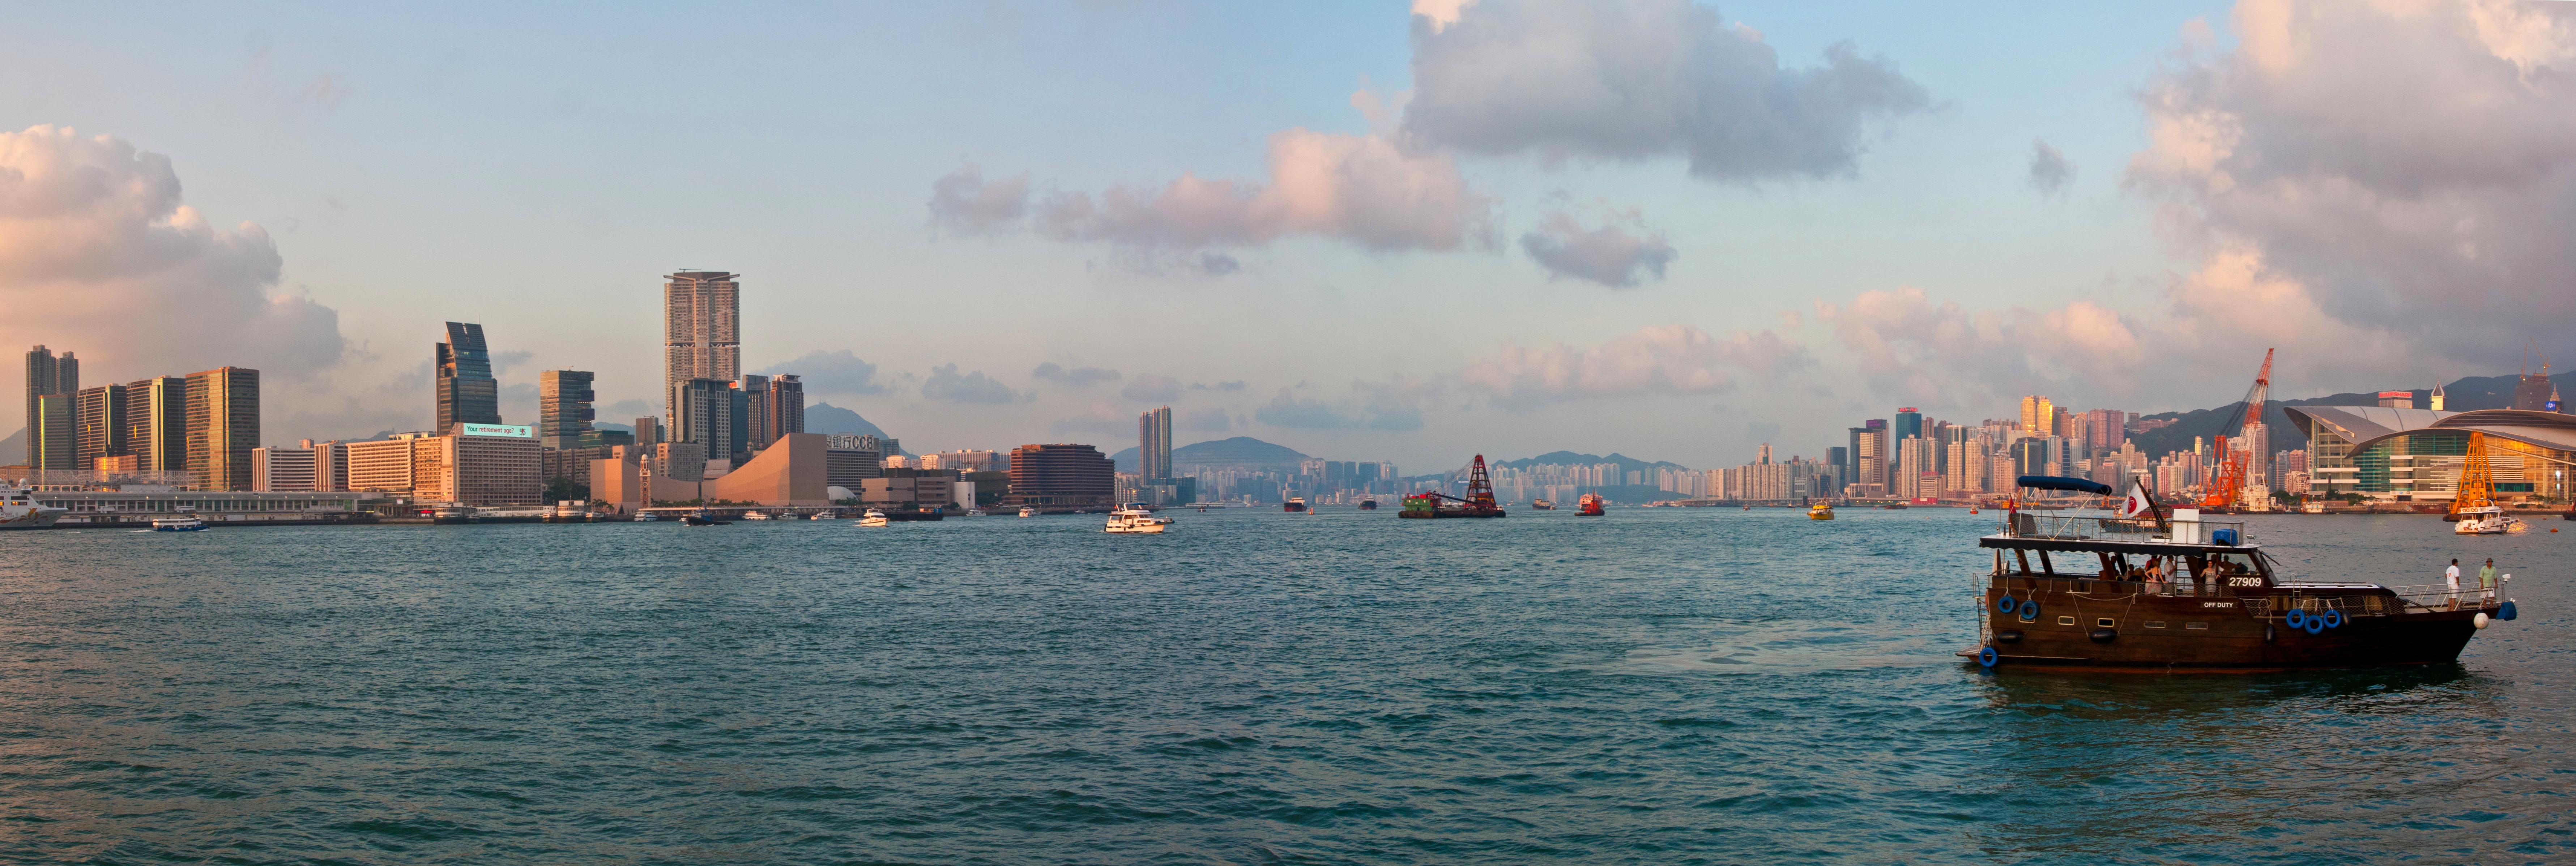 Panorama HK 2011 3